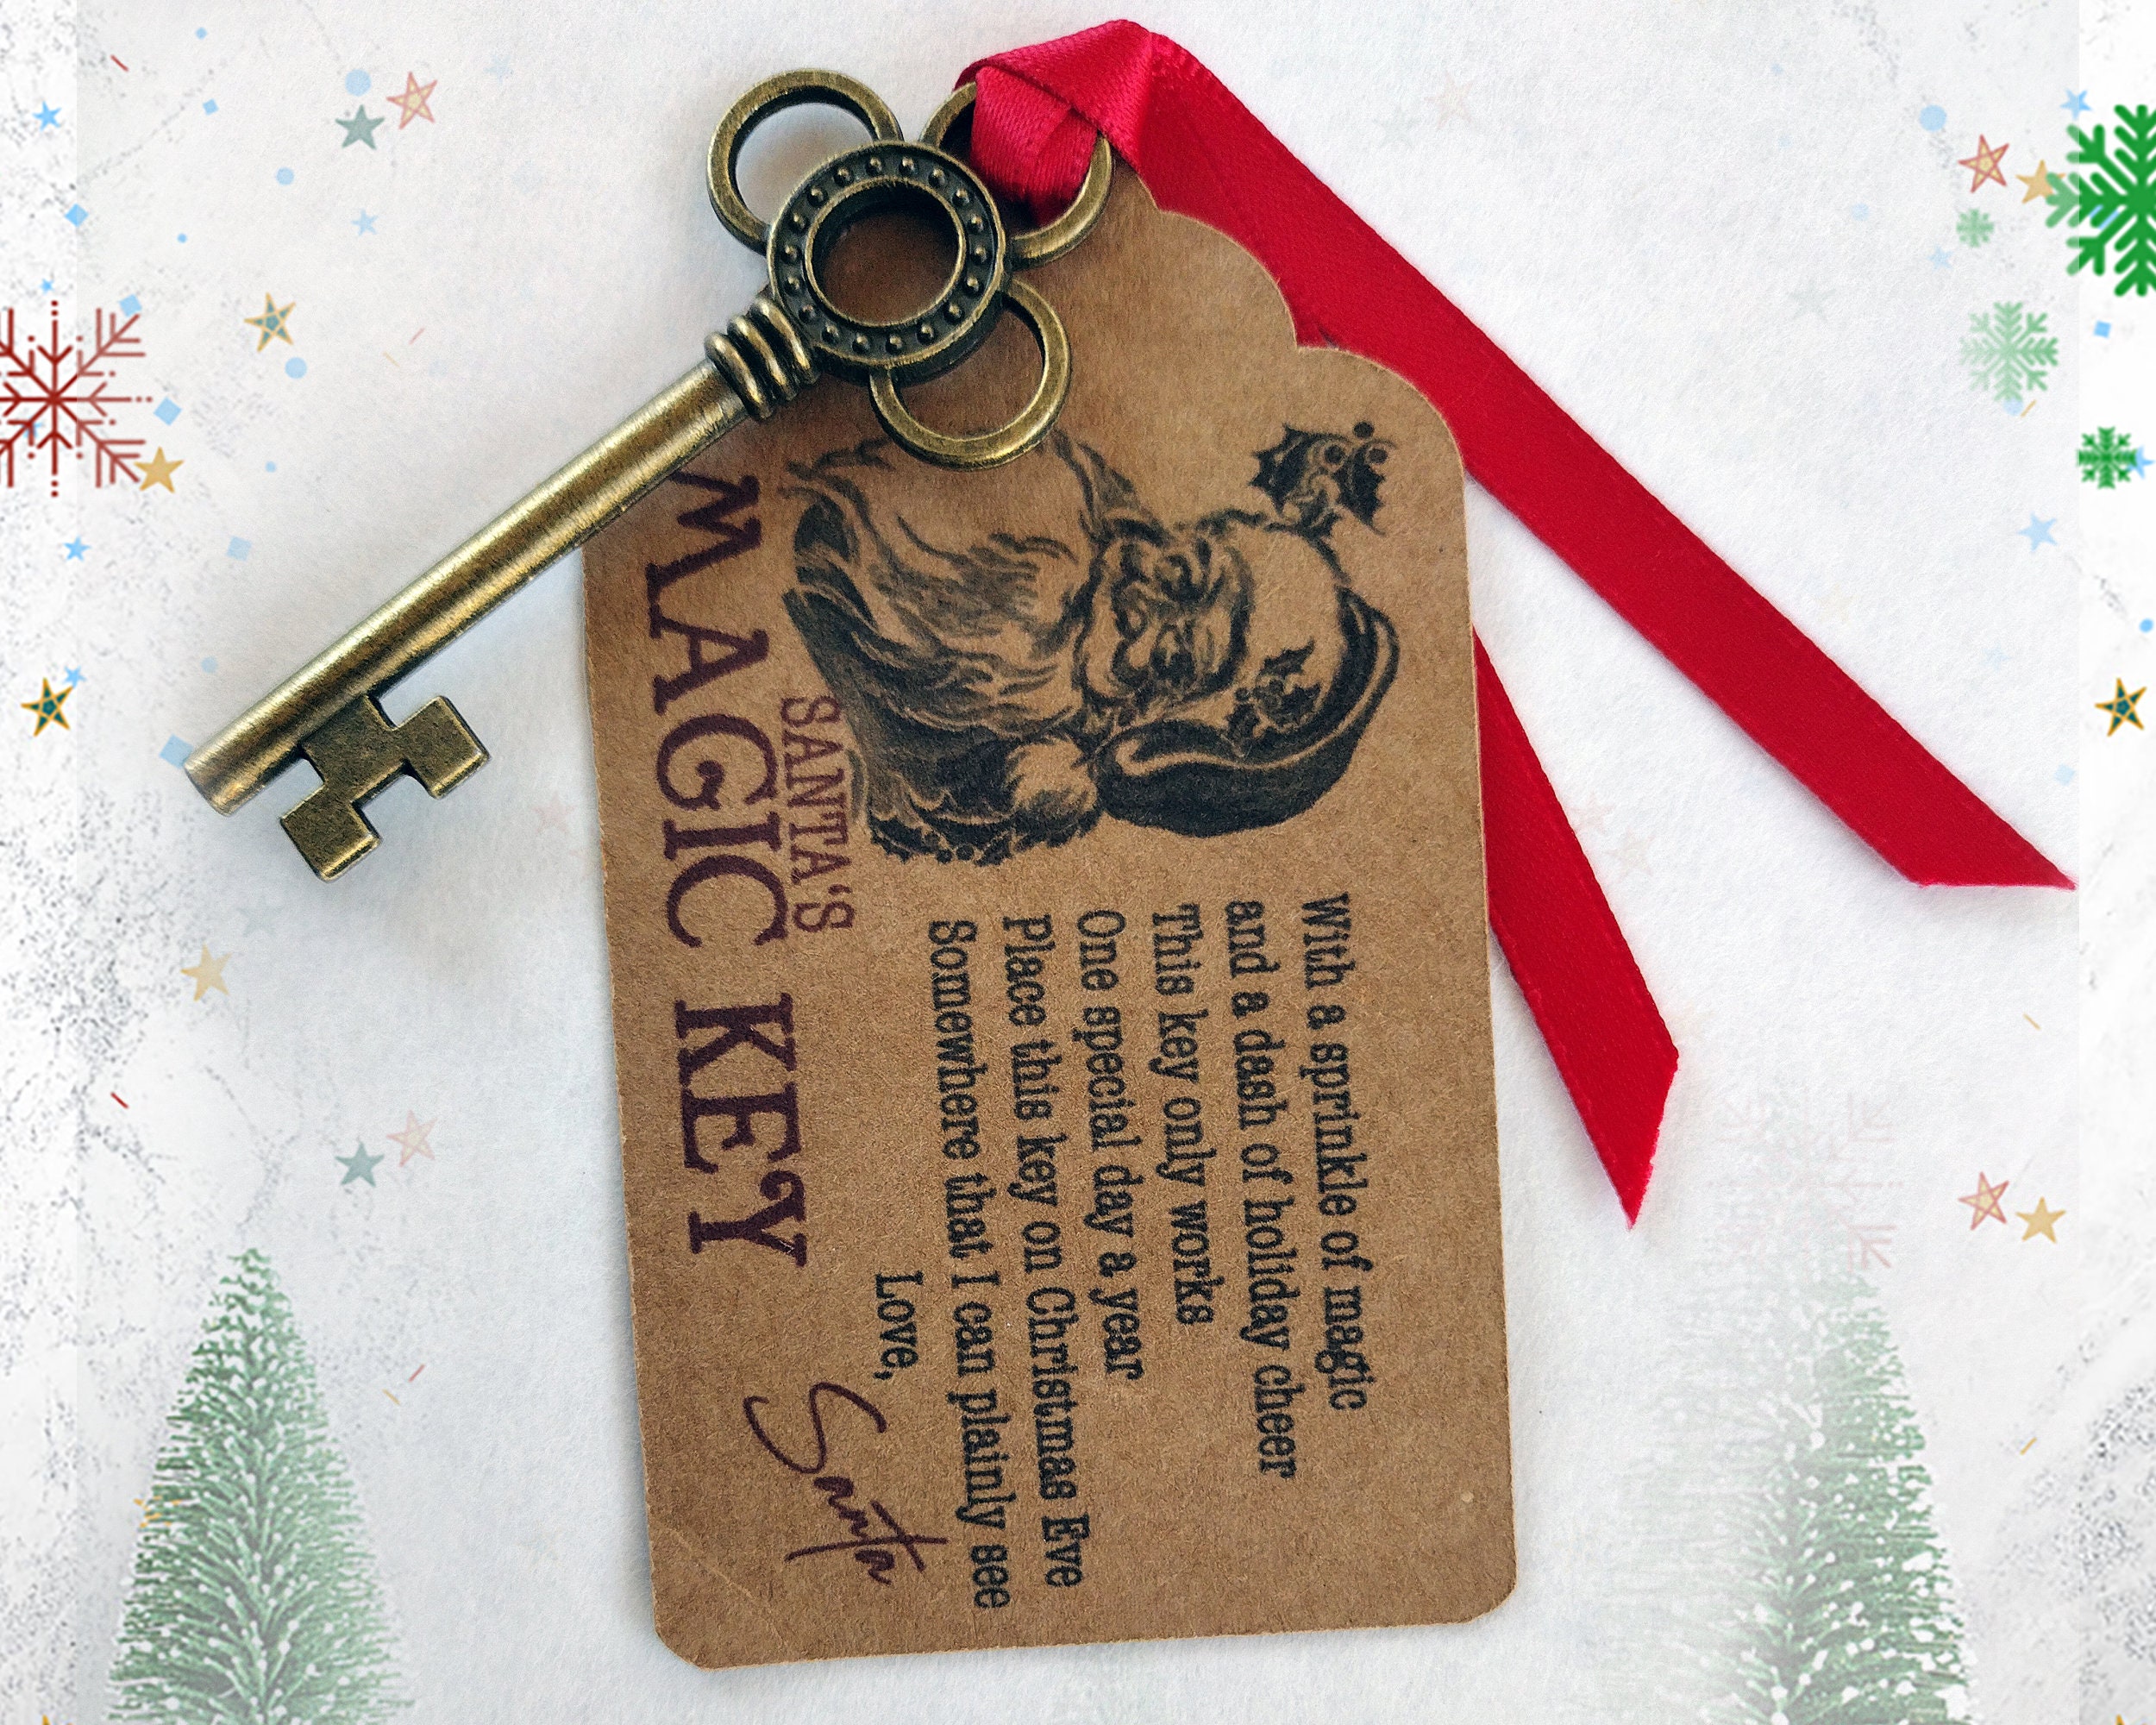 Funny Key Chain Creative Christmas Santa Claus Christmas Key Chains Key  Ring Car Key Accessories Bag Pendant Decoration B 